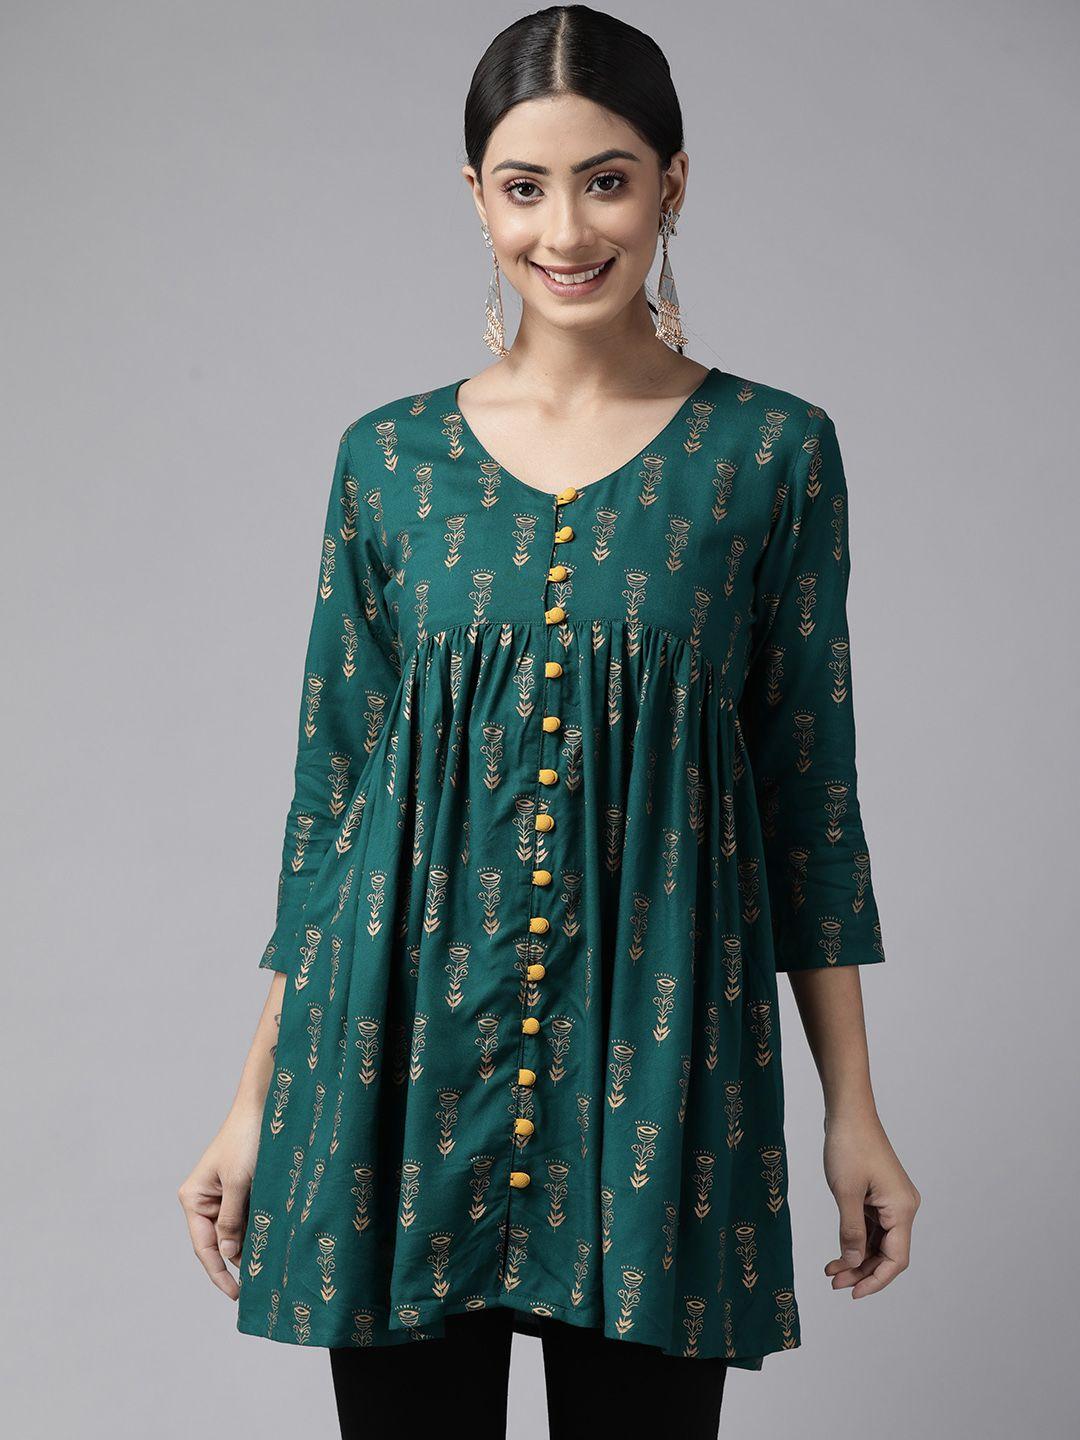 panit-women-green-ethnic-motifs-printed-pleated-kurti